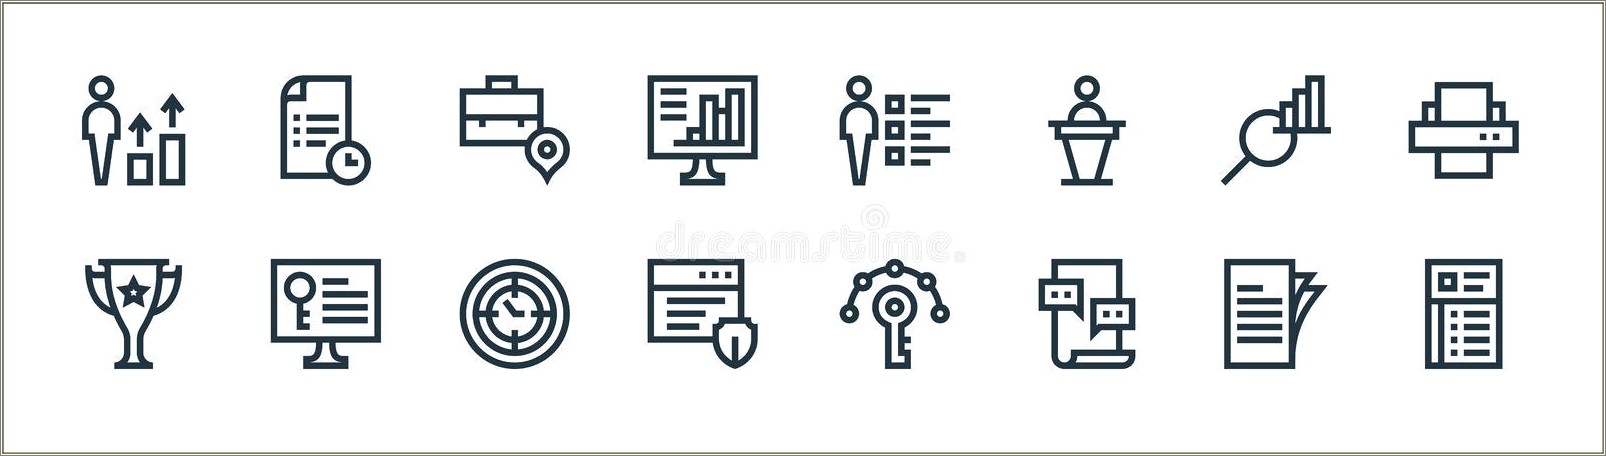 Profissional Summary Skills Symbols For Resume